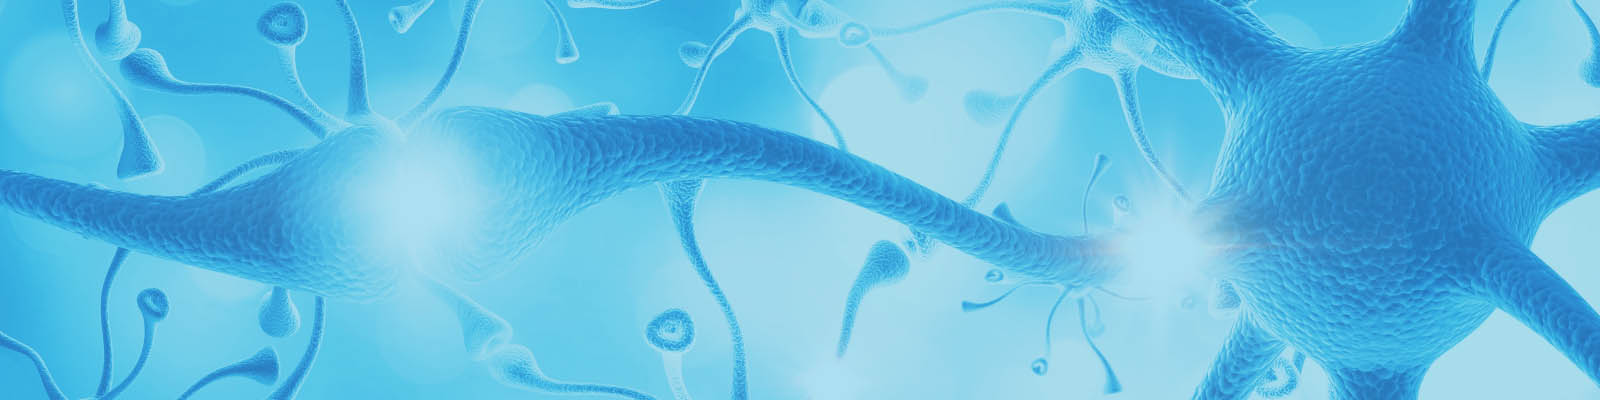 Webinar Images - V2 blue neurons Avance Clinical